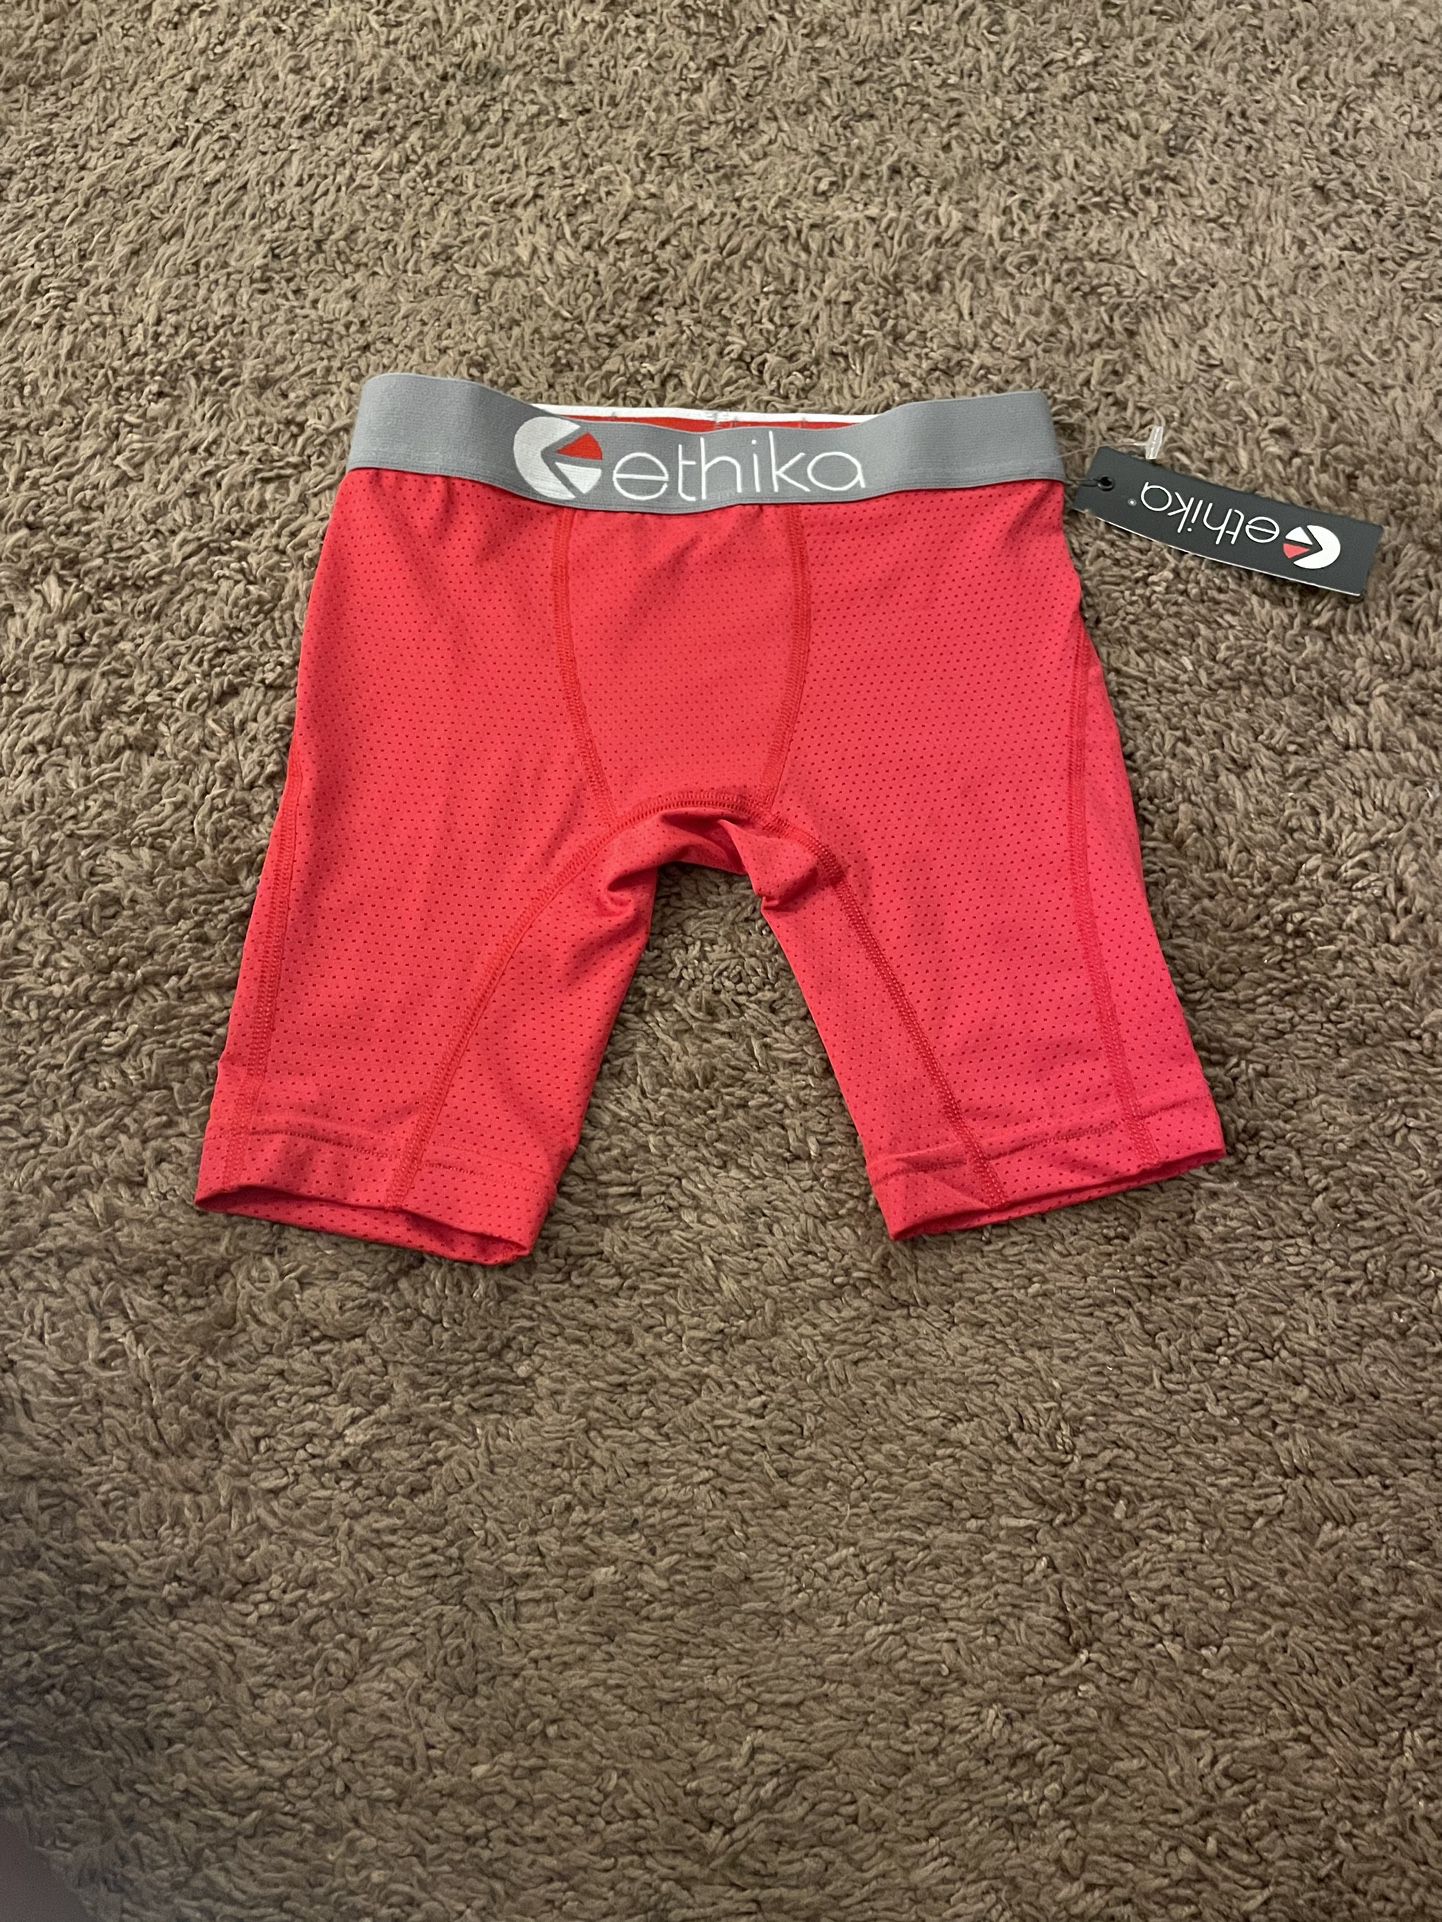 Boys Ethika Underwear Size Small 6/8